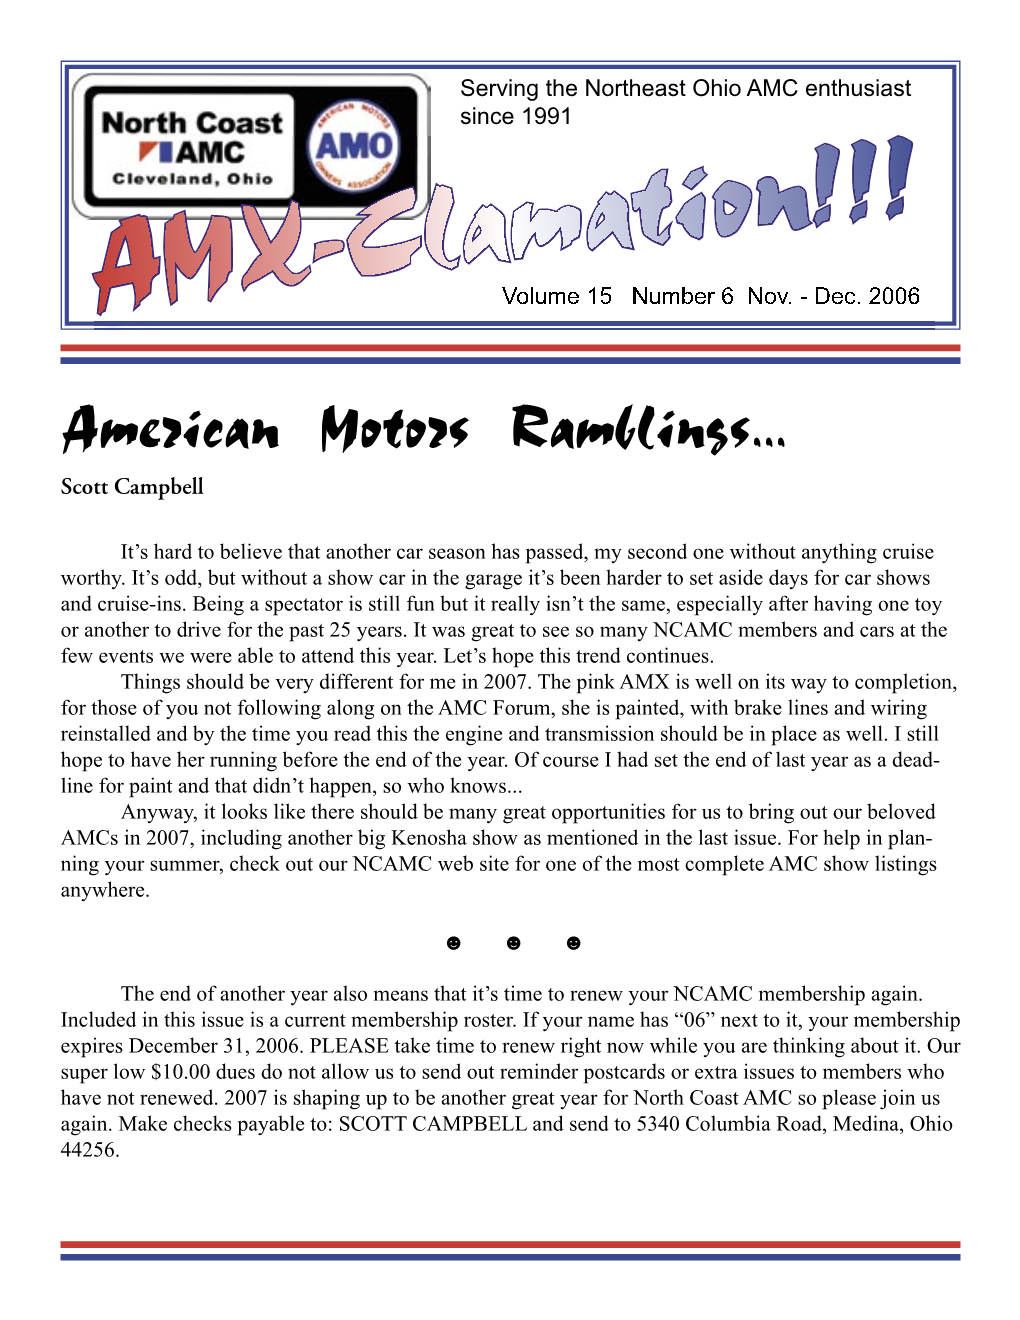 AMX-Clamation!!!Volumevolume 15 Number 6 Novnov